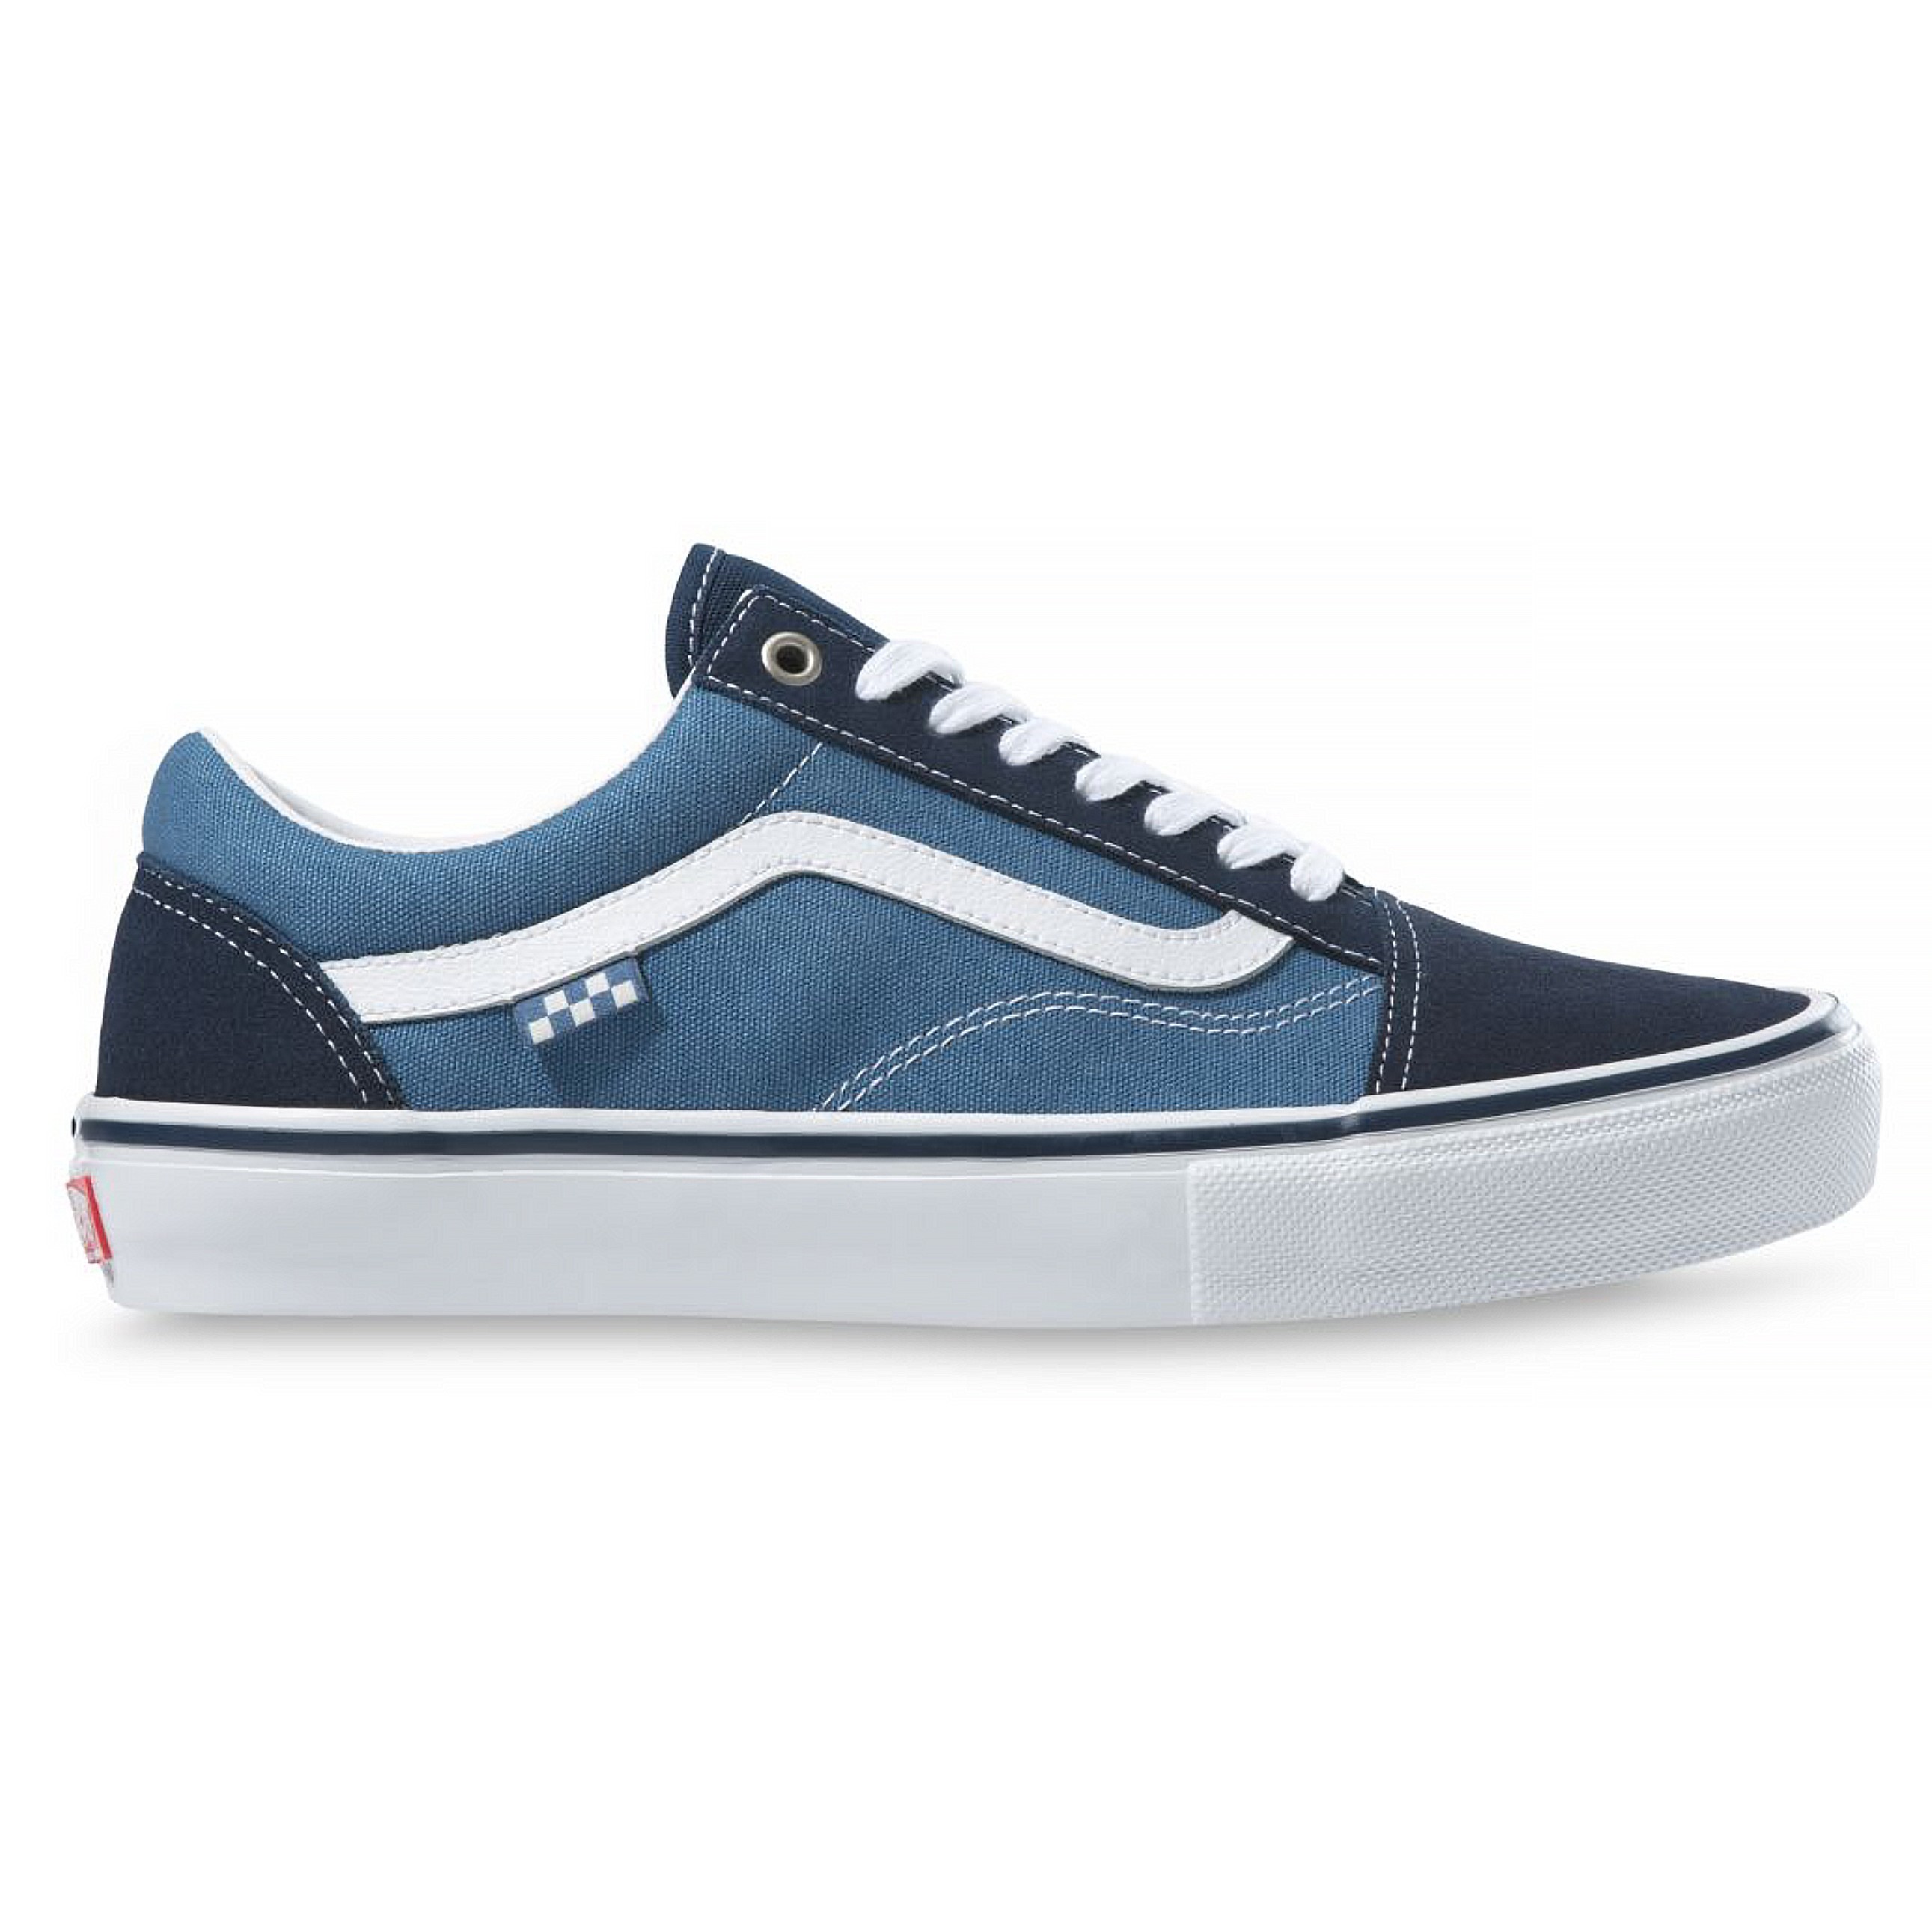 Vans Skate Old Skool Shoes - Navy/White 8